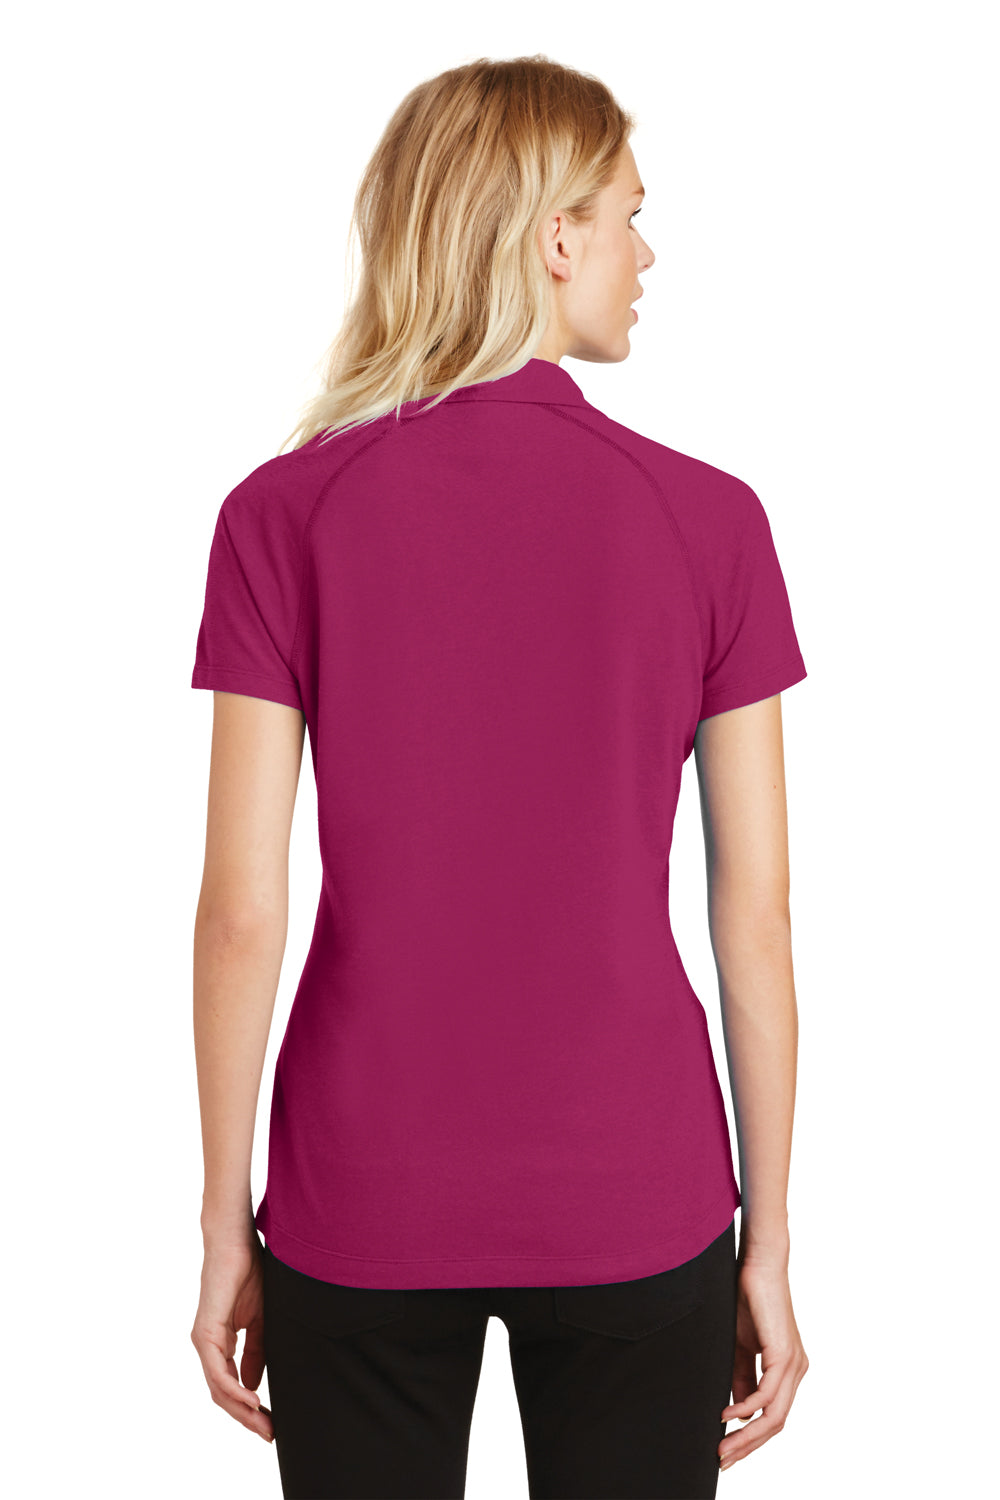 Ogio LOG126 Womens Onyx Moisture Wicking Short Sleeve Polo Shirt Fuchsia Pink Back